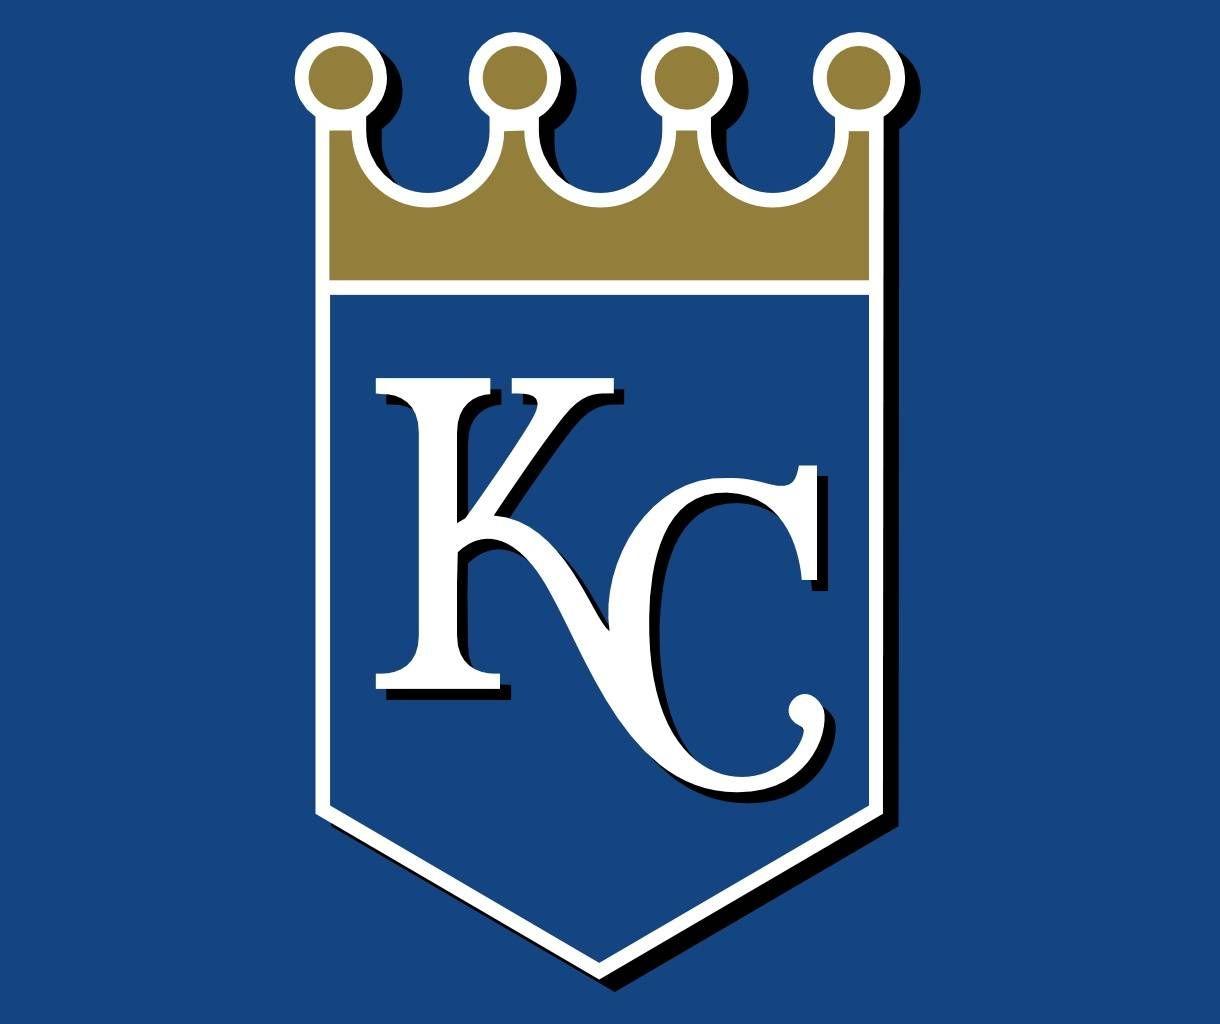 Kc Royals Wallpapers - Top Free Kc Royals Backgrounds - Wallpaperaccess